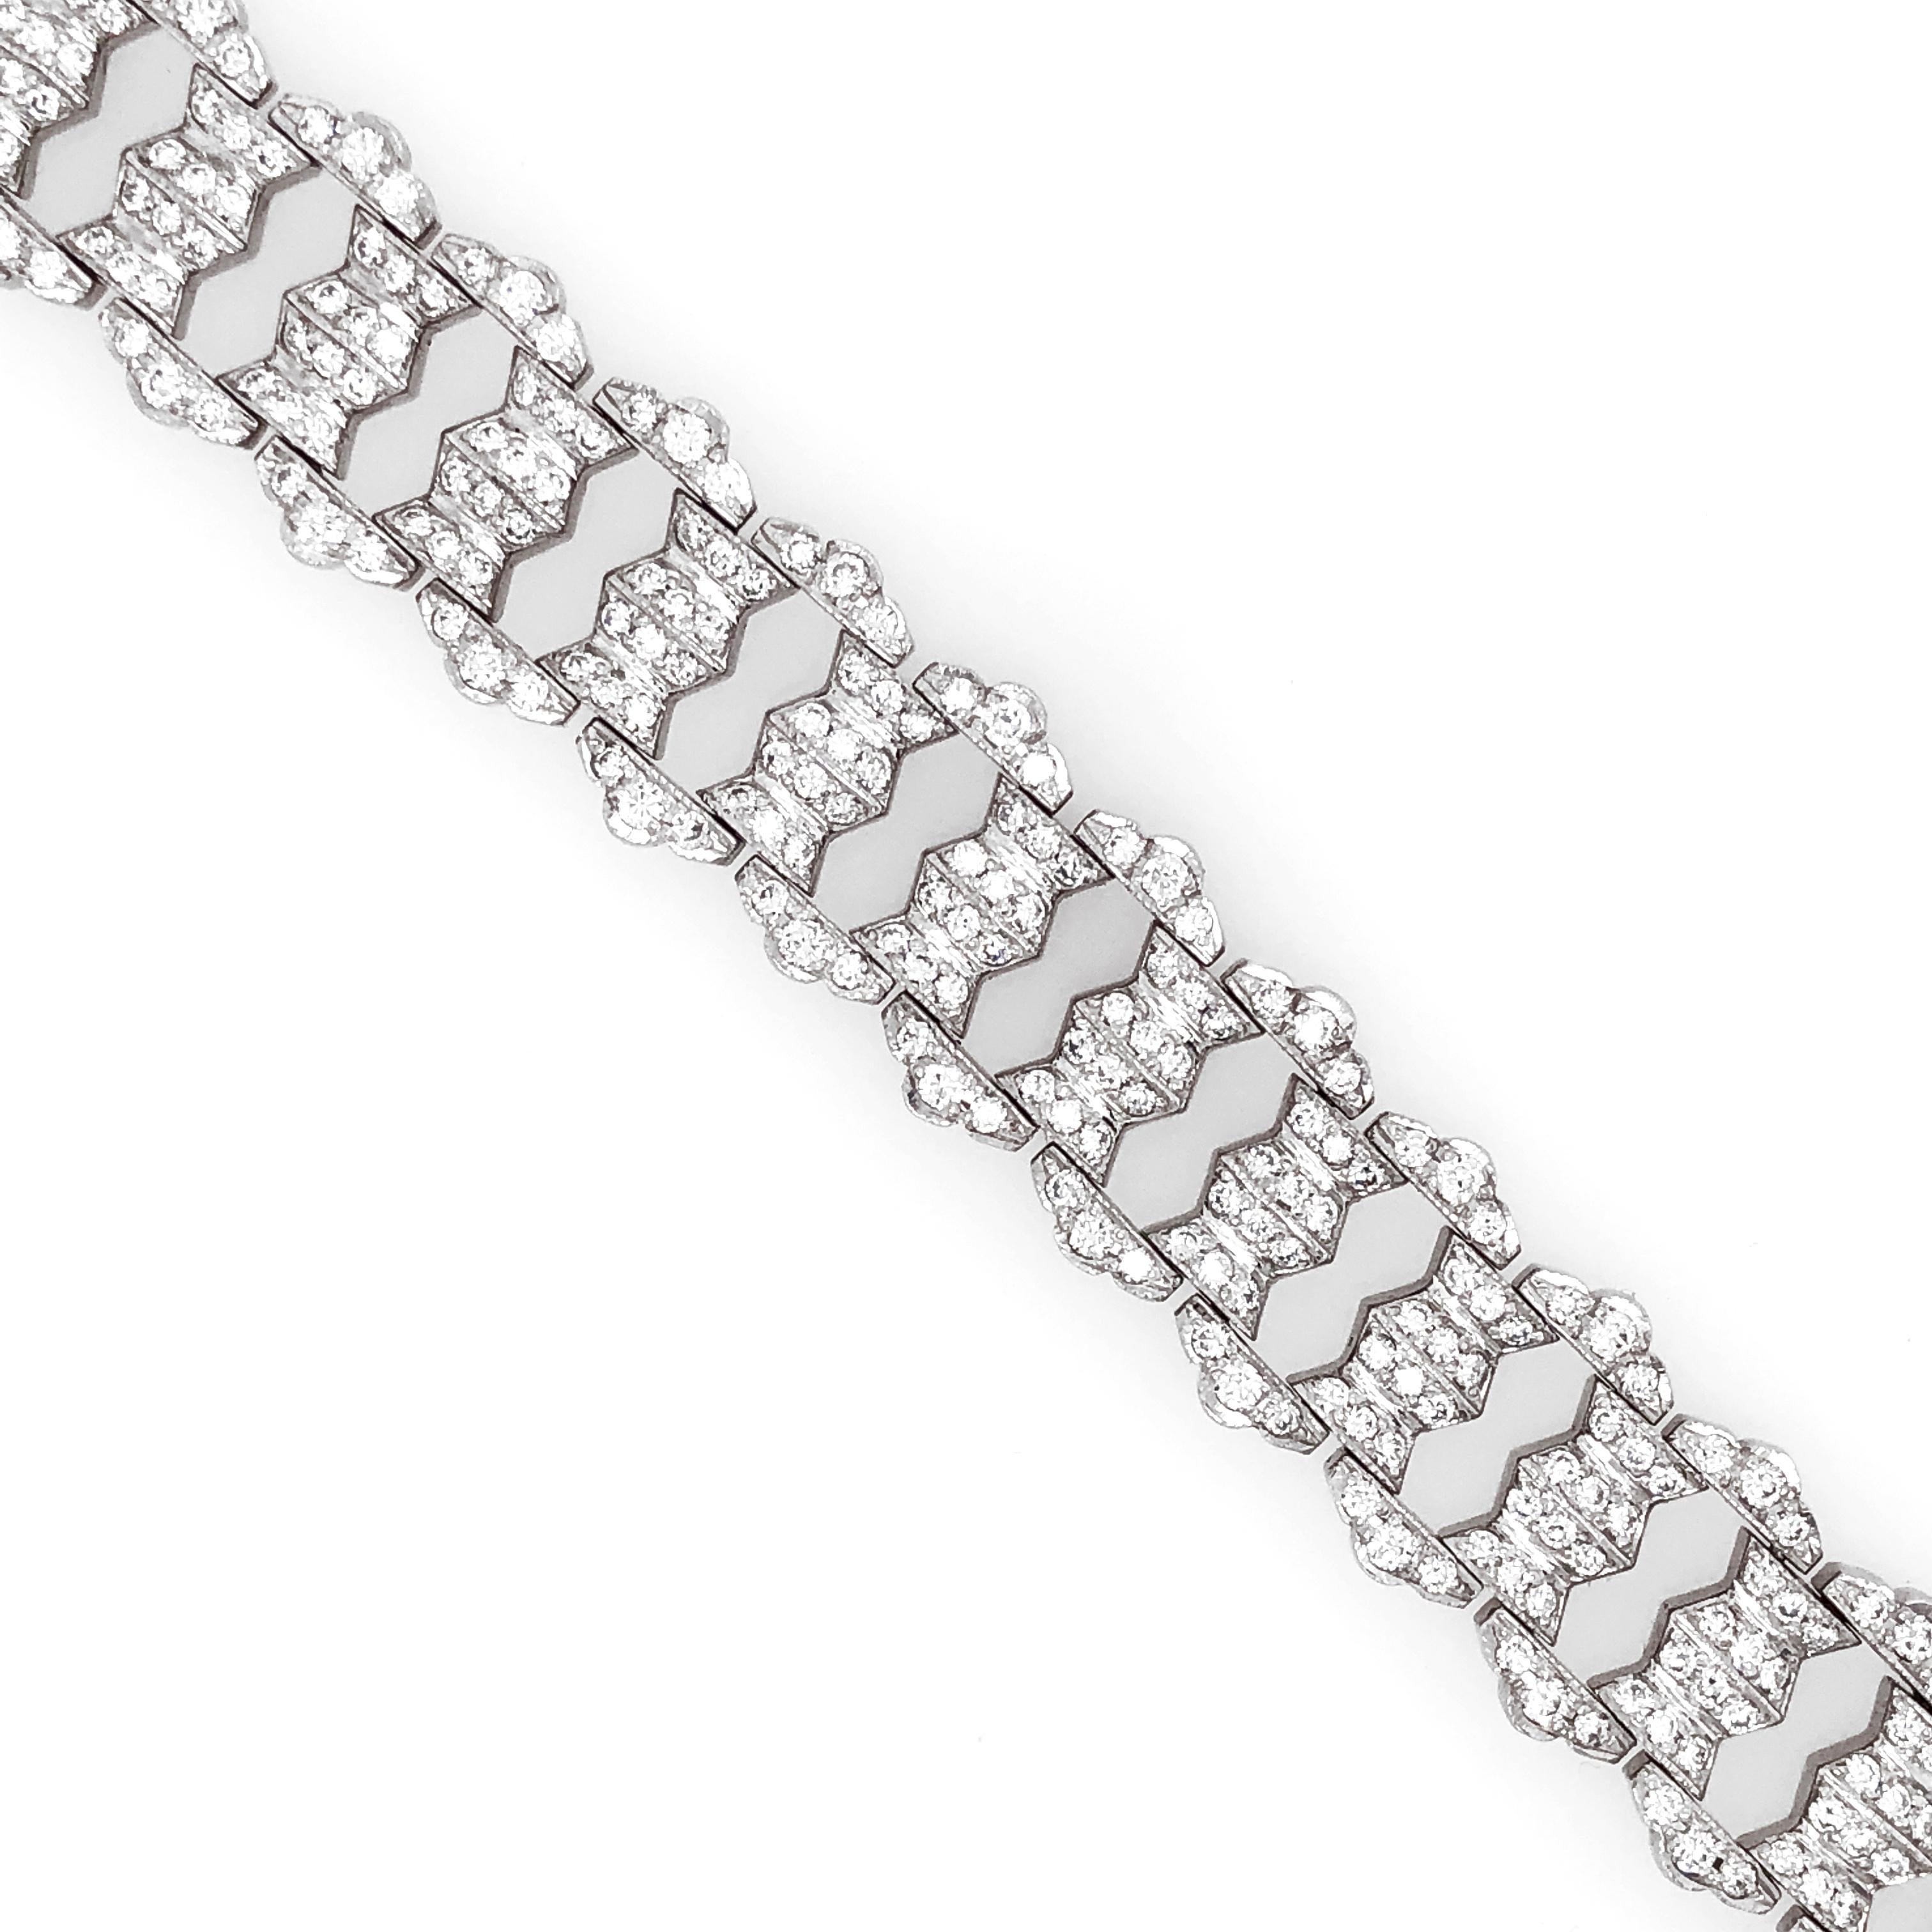 Elegant art deco / retro inspired platinum bracelet.
Round natural diamonds 12.38 ct.
Diamonds in G-H color clarity VS.
Length: 18.6 cm
Width: 1.5 cm 
Weight: 67 g